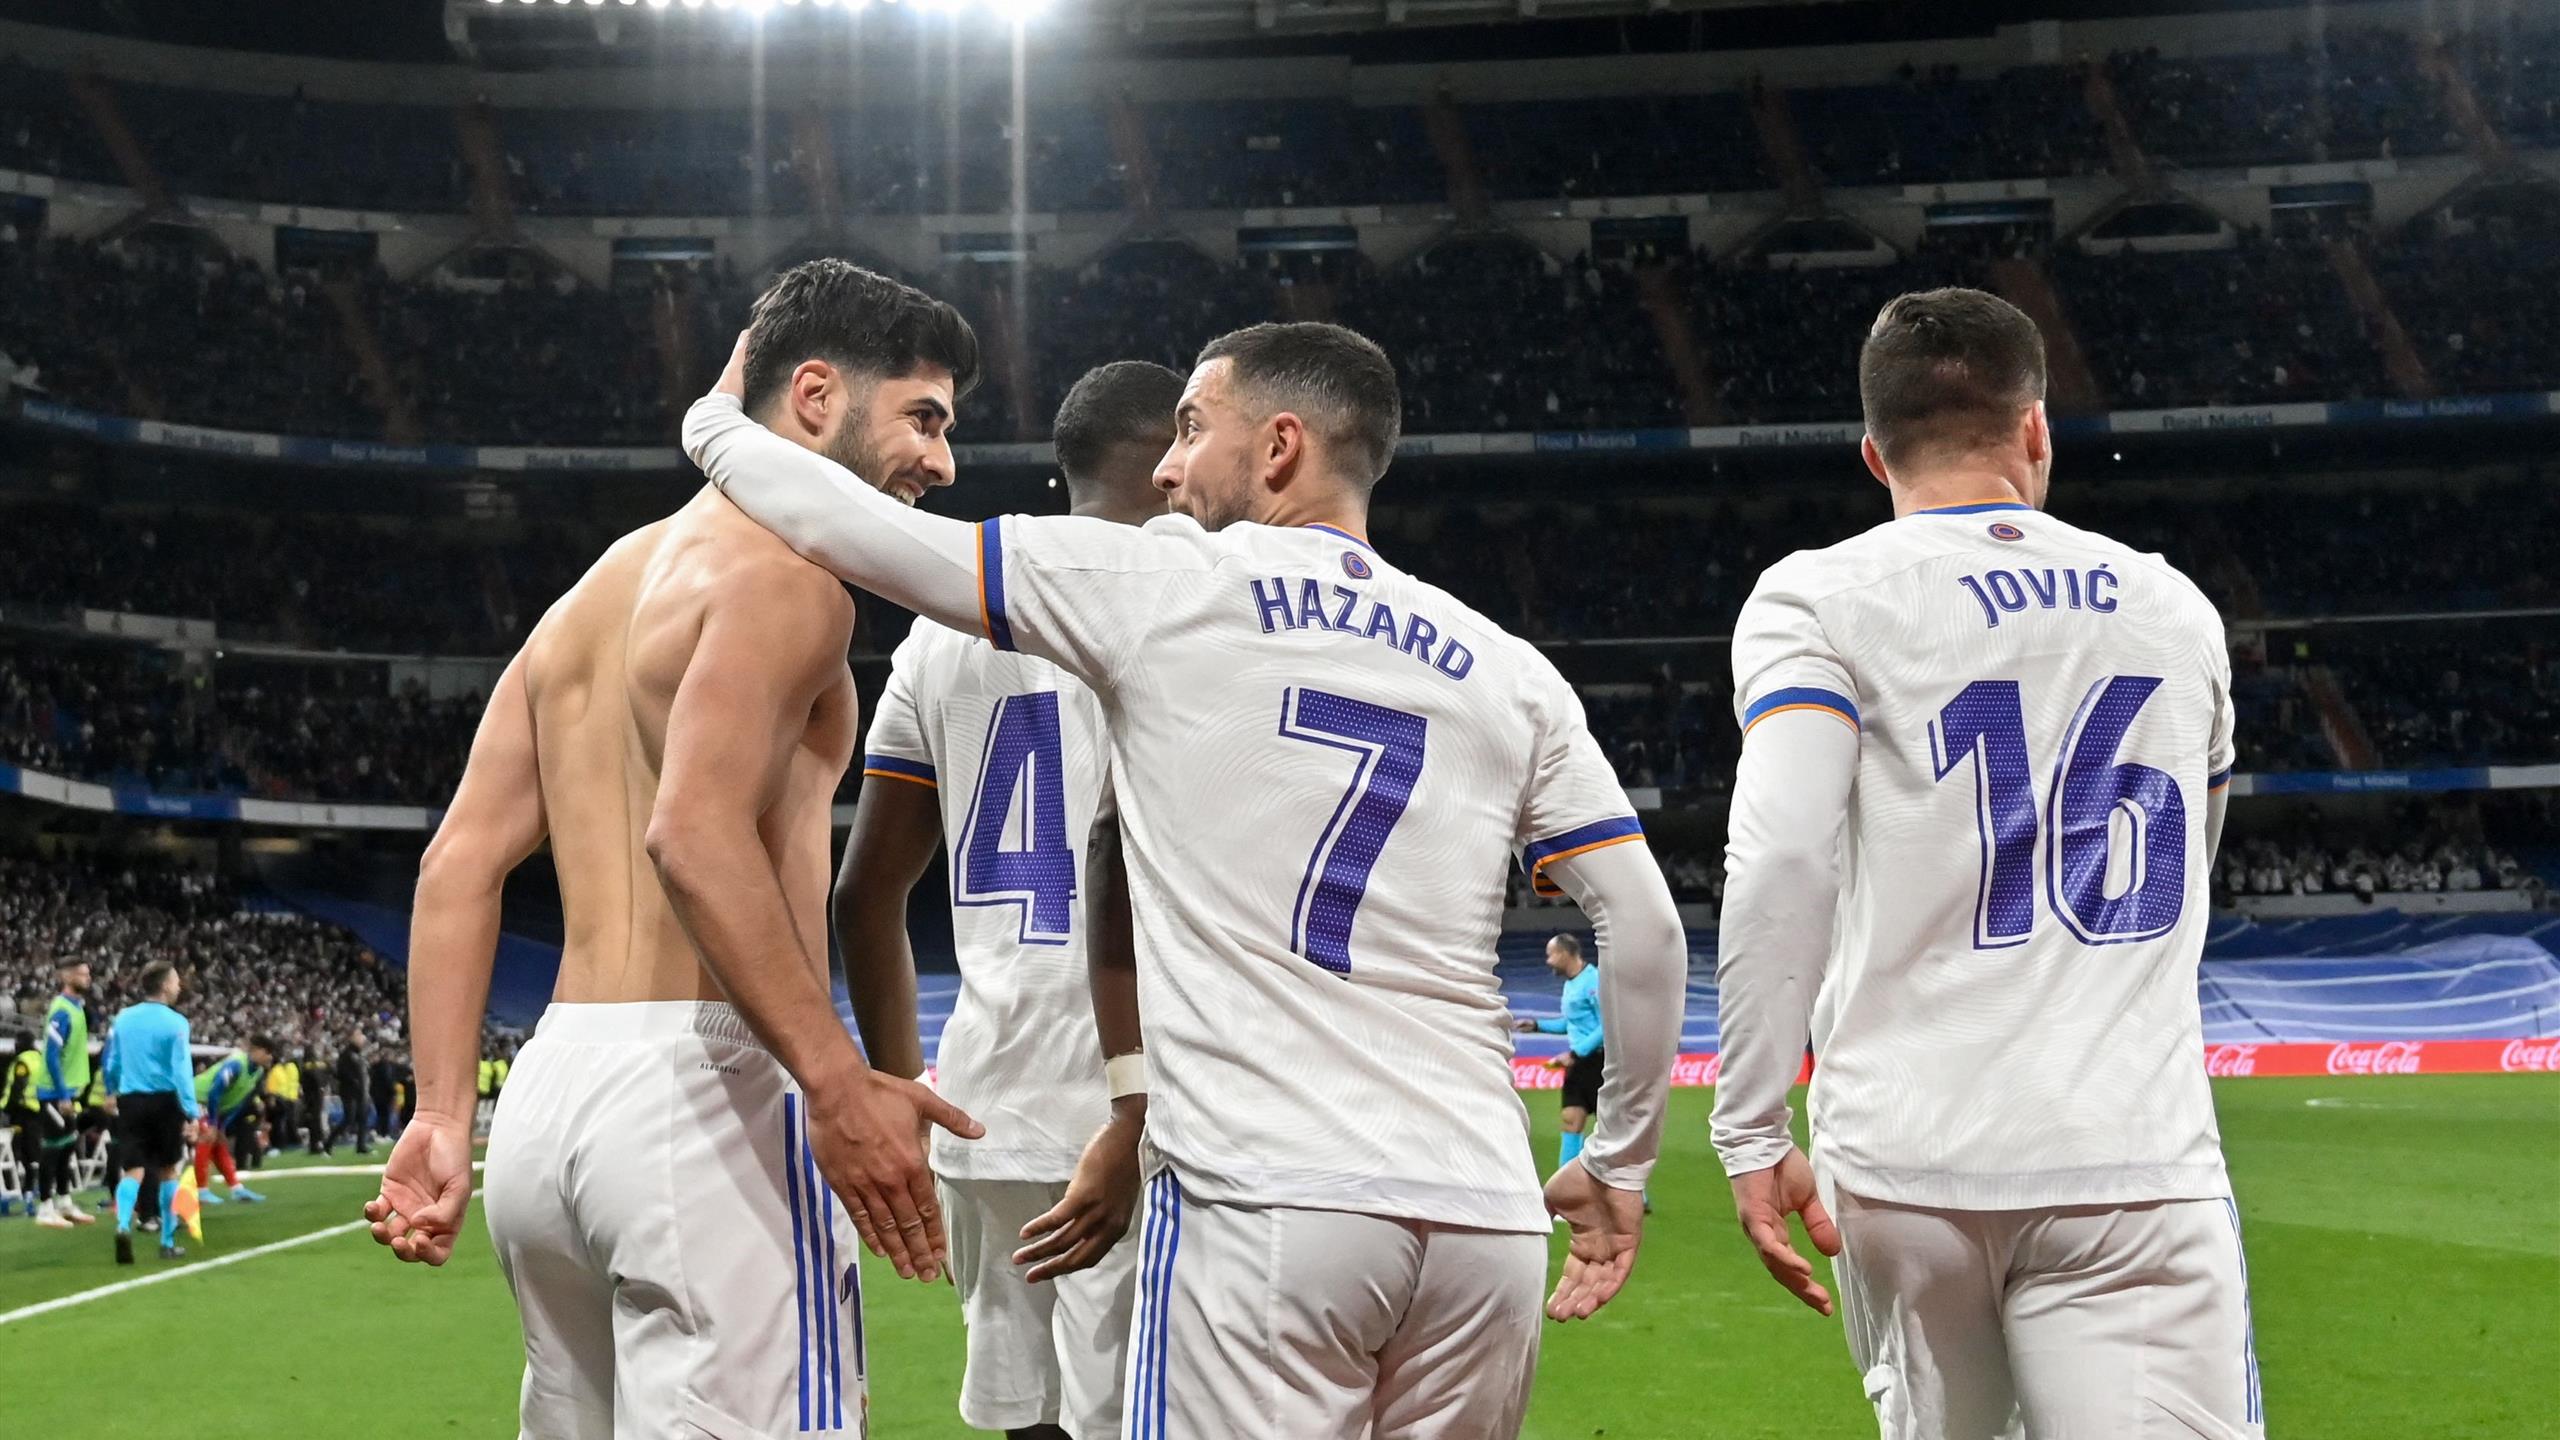 Milan shfaq interes për lojtarin e Real Madrid